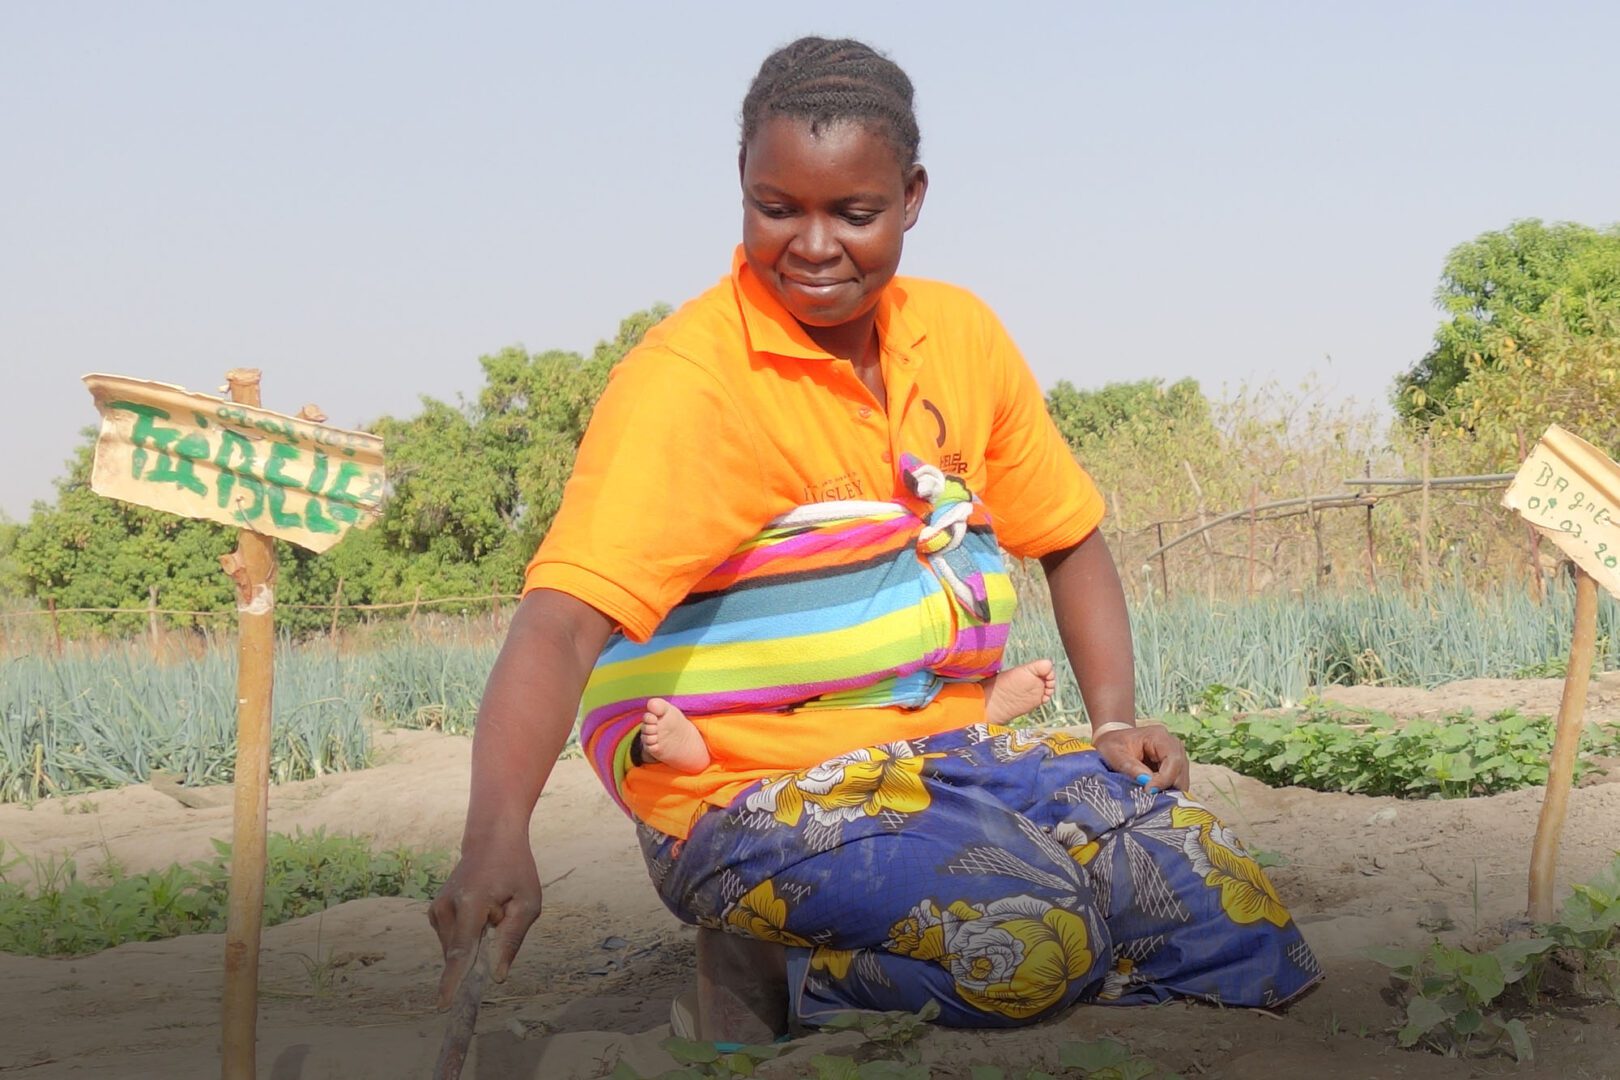 Kacoara, a successful sweet potato farmer, tending to her garden.